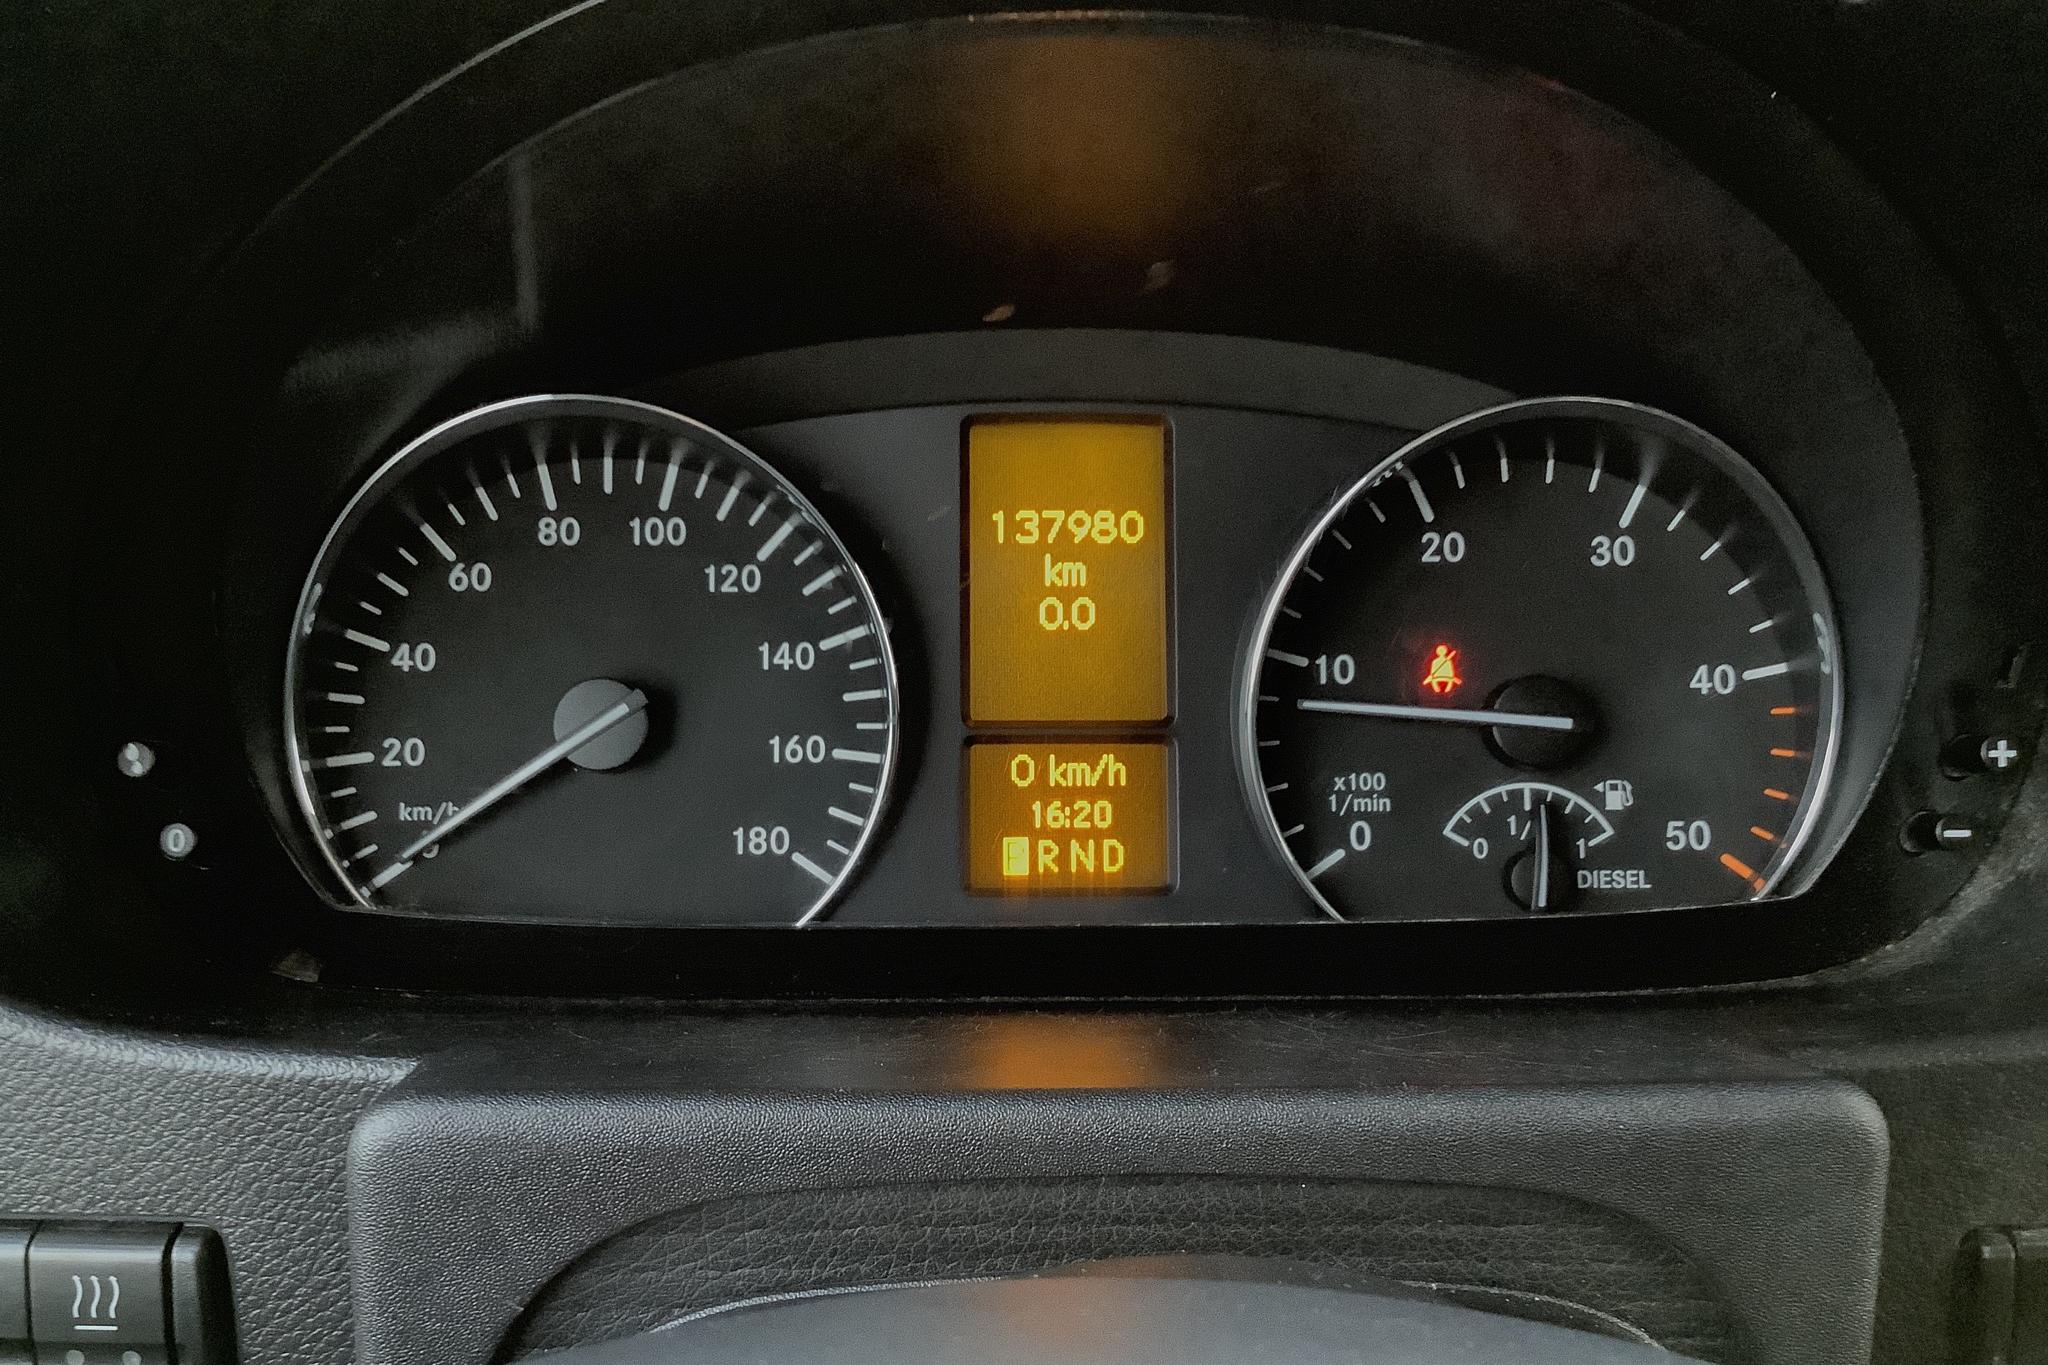 Mercedes Sprinter 310 CDI (95hk) - 137 980 km - Automatic - white - 2016